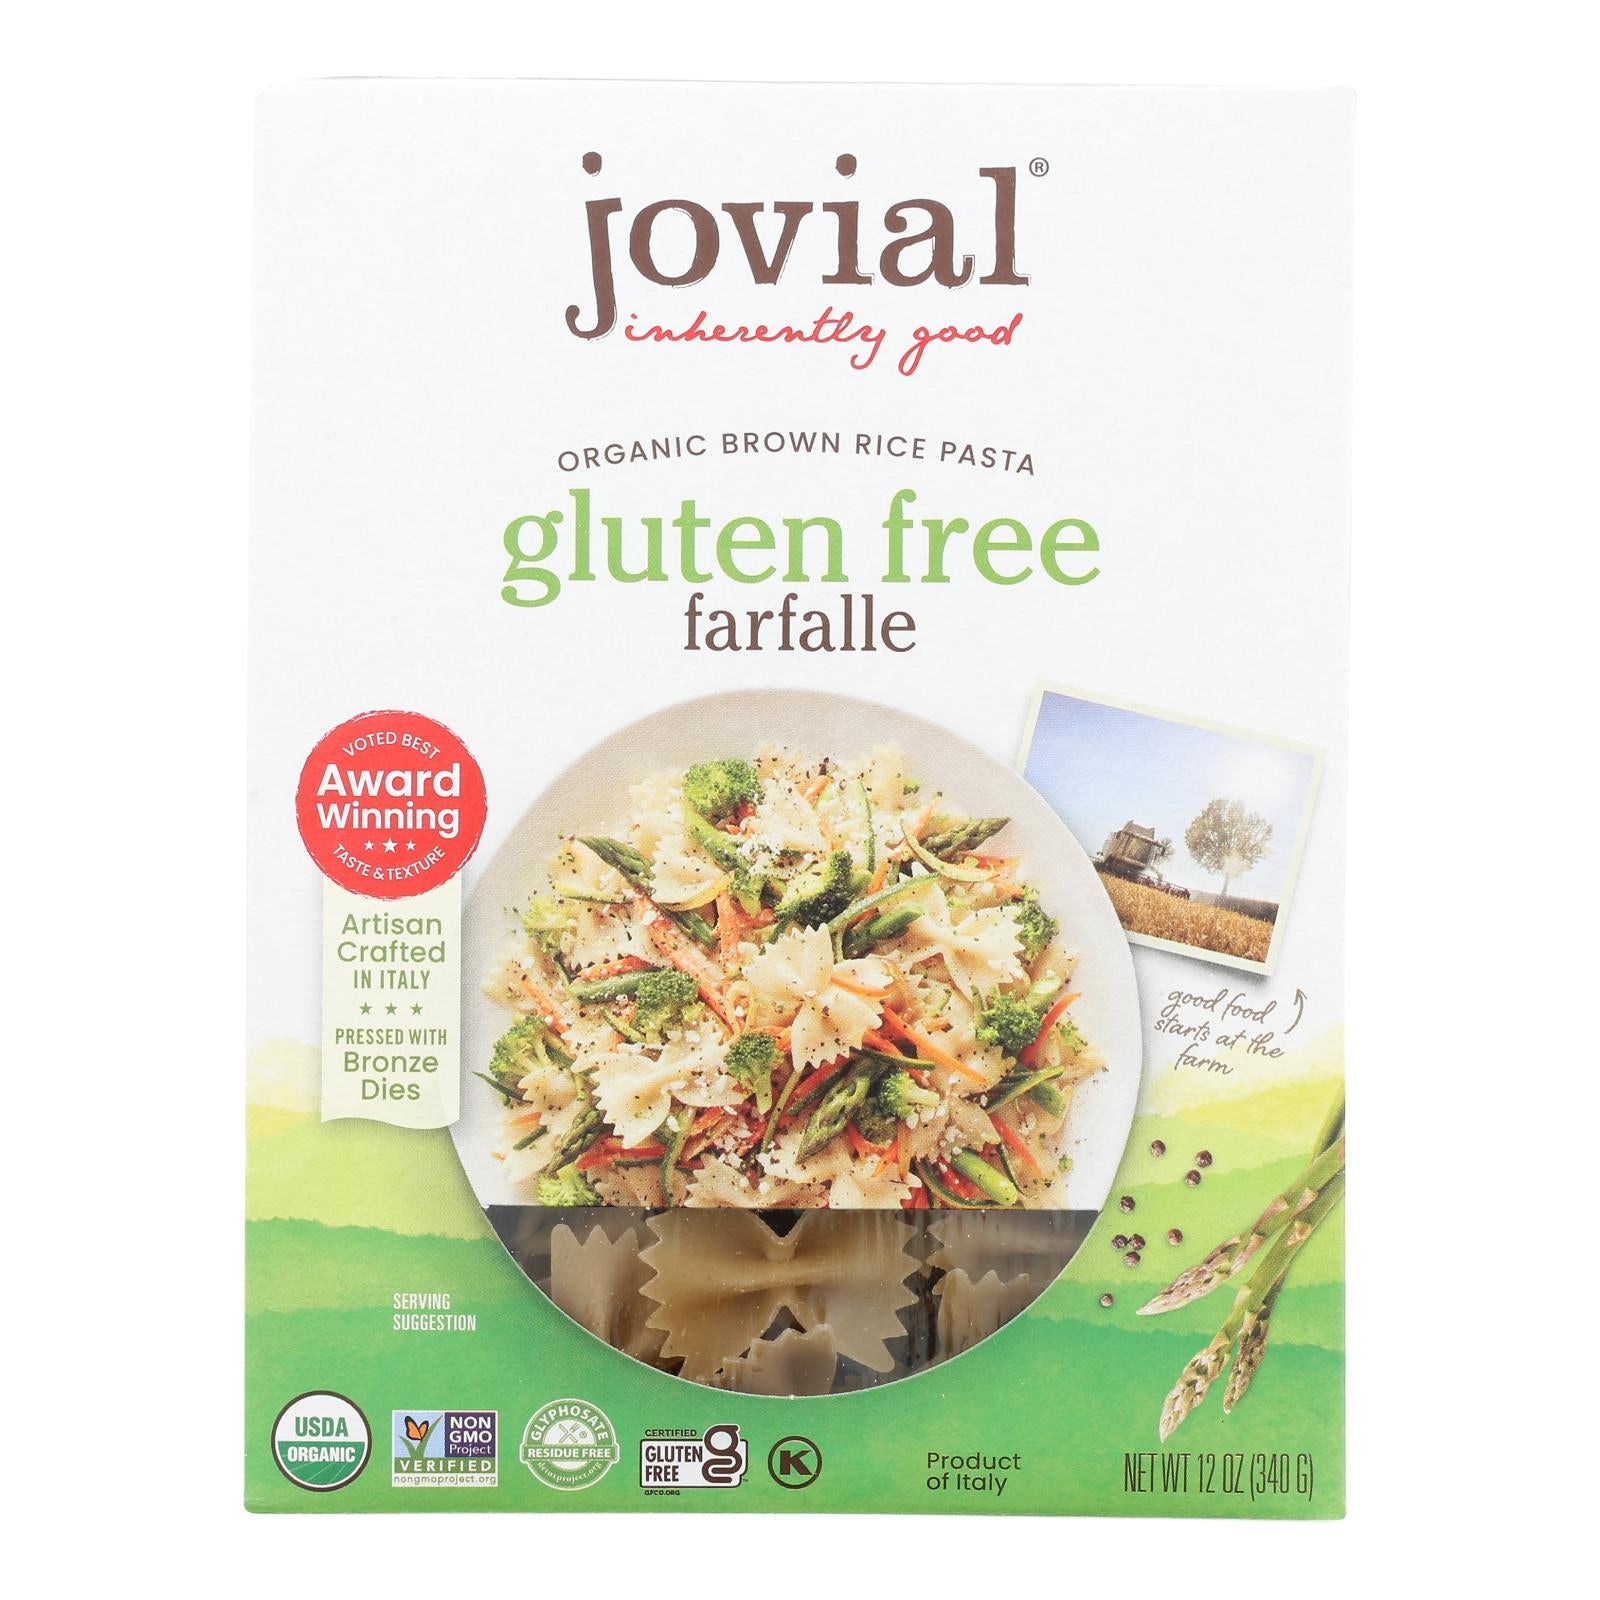 Jovial - Gluten Free Brown Rice Pasta - Farfalle - Case Of 12 - 12 Oz.